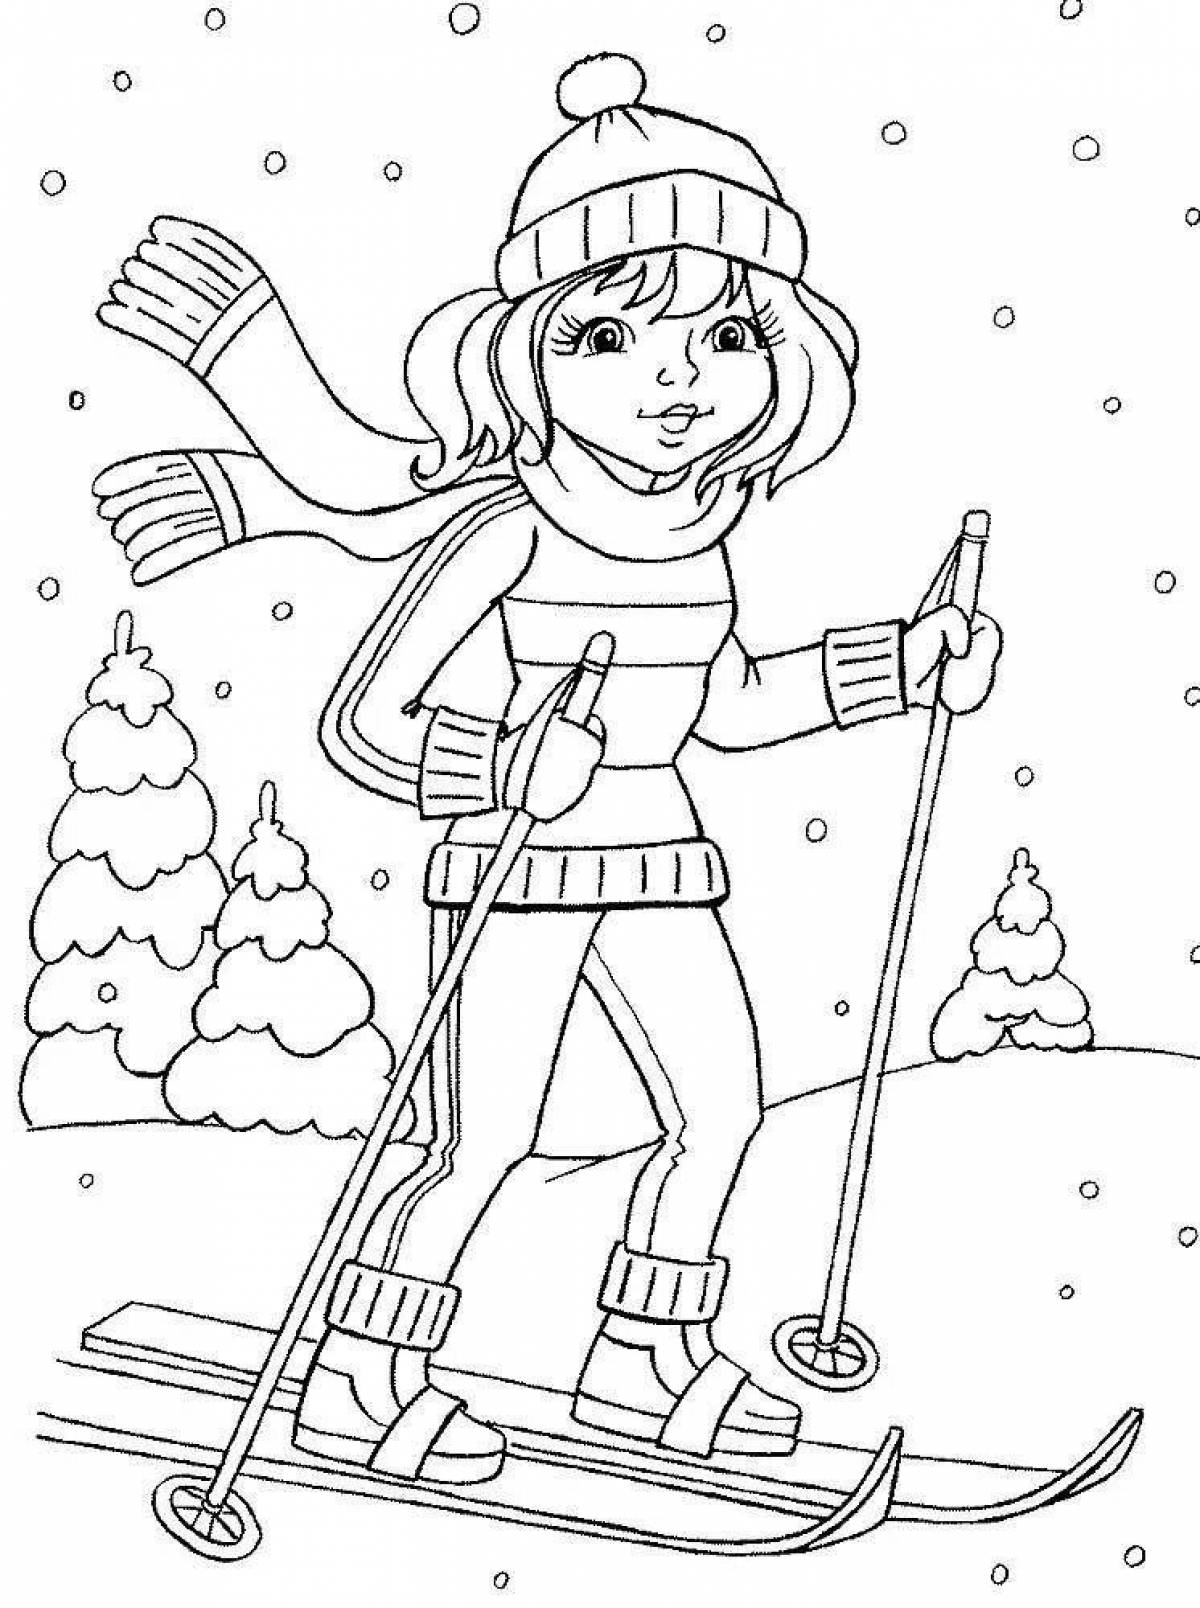 Joyful coloring book winter sports for preschoolers